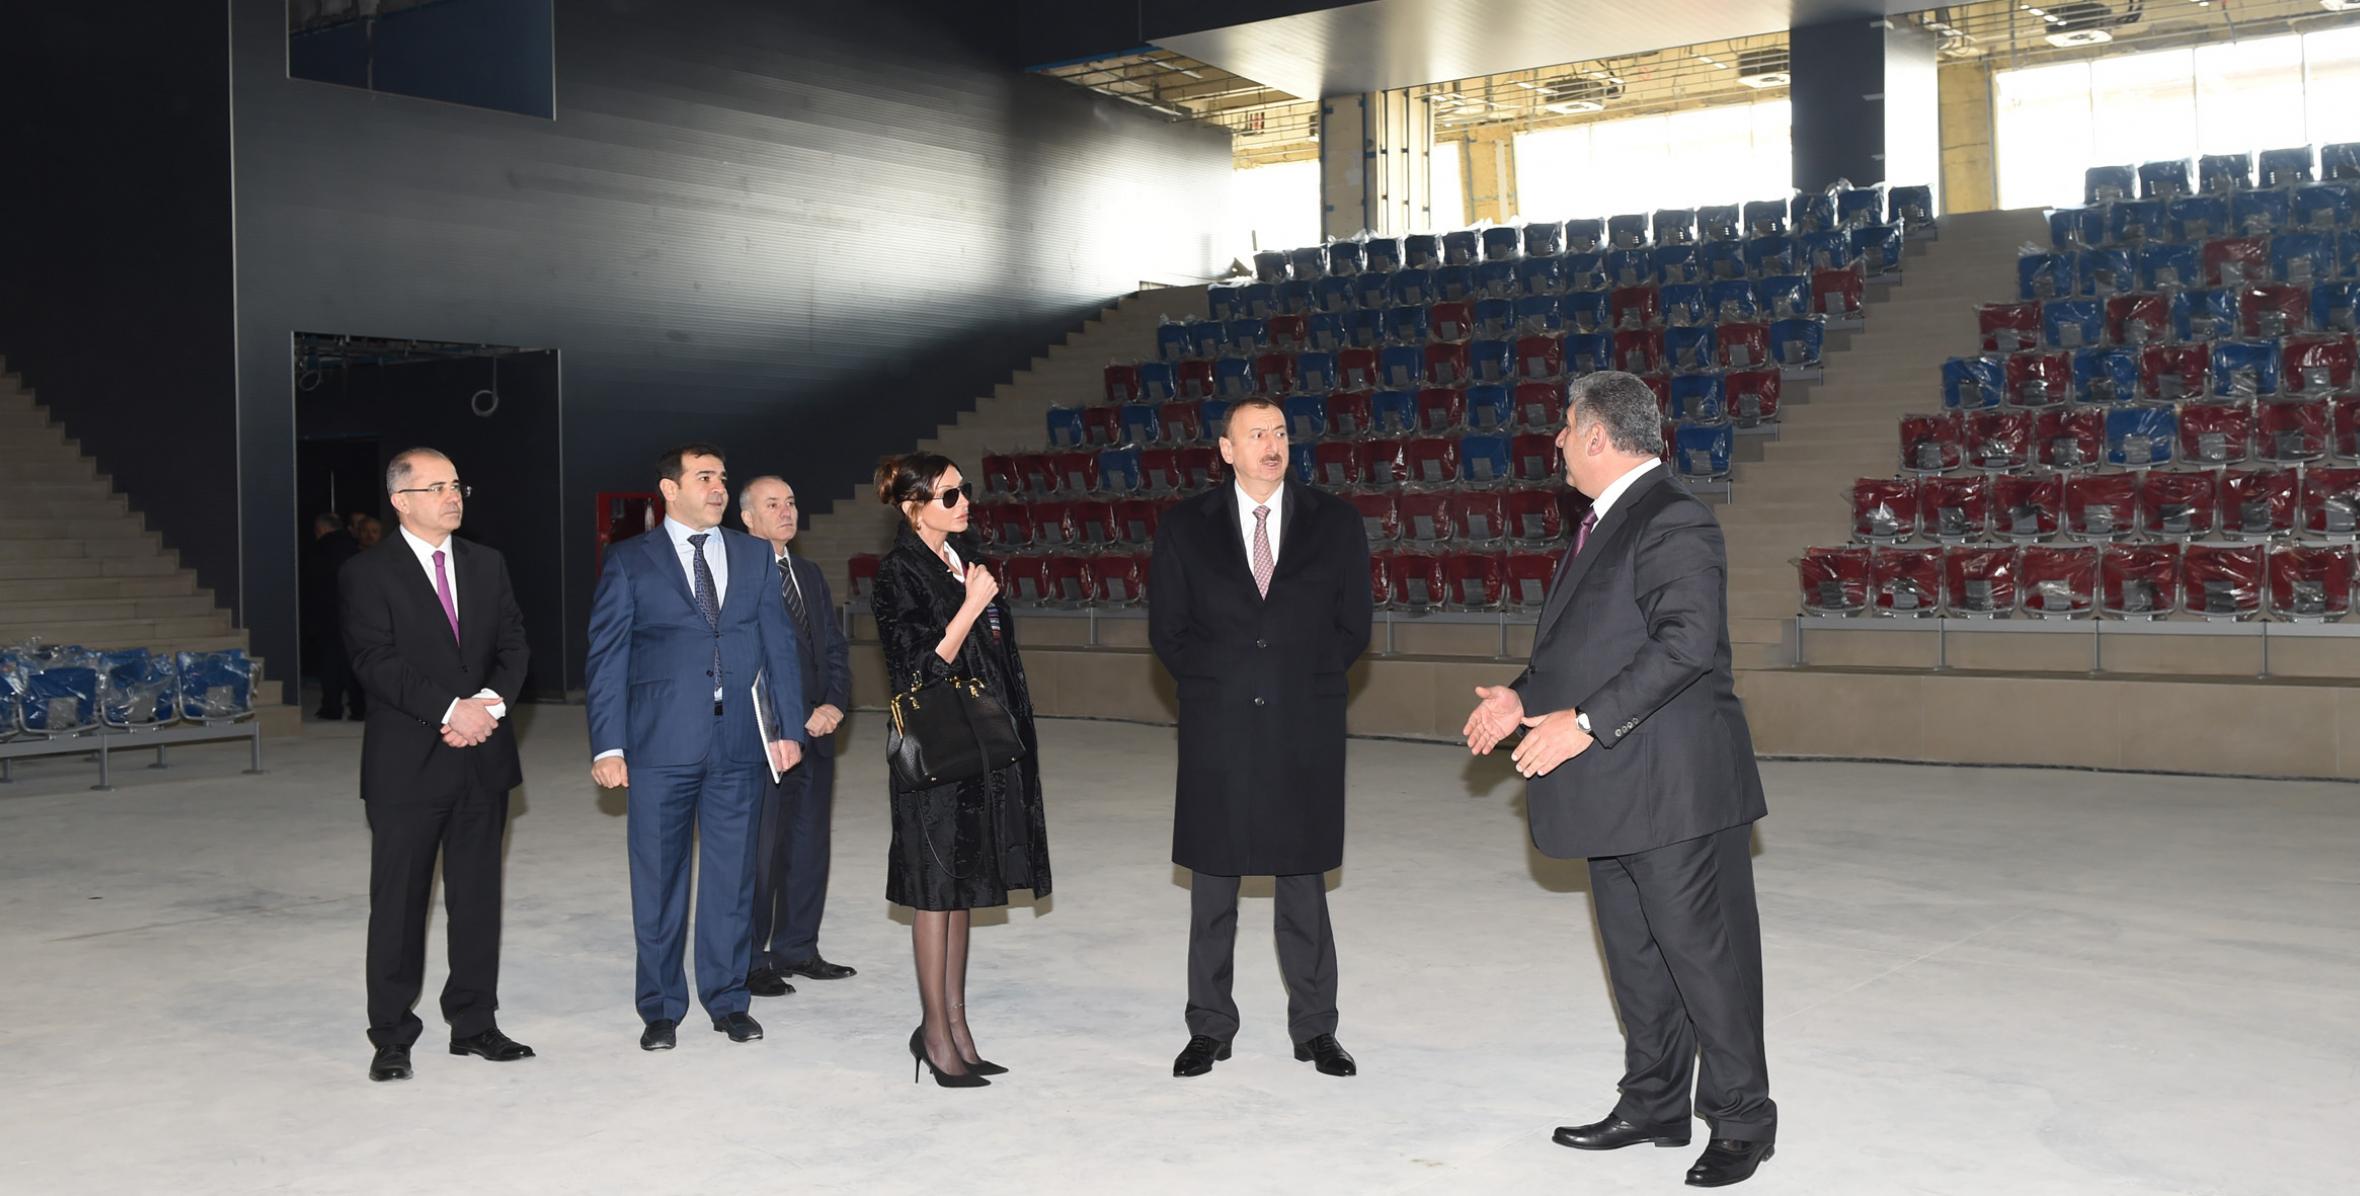 Ilham Aliyev reviewed the progress of reconstruction at the Baku Sports Palace